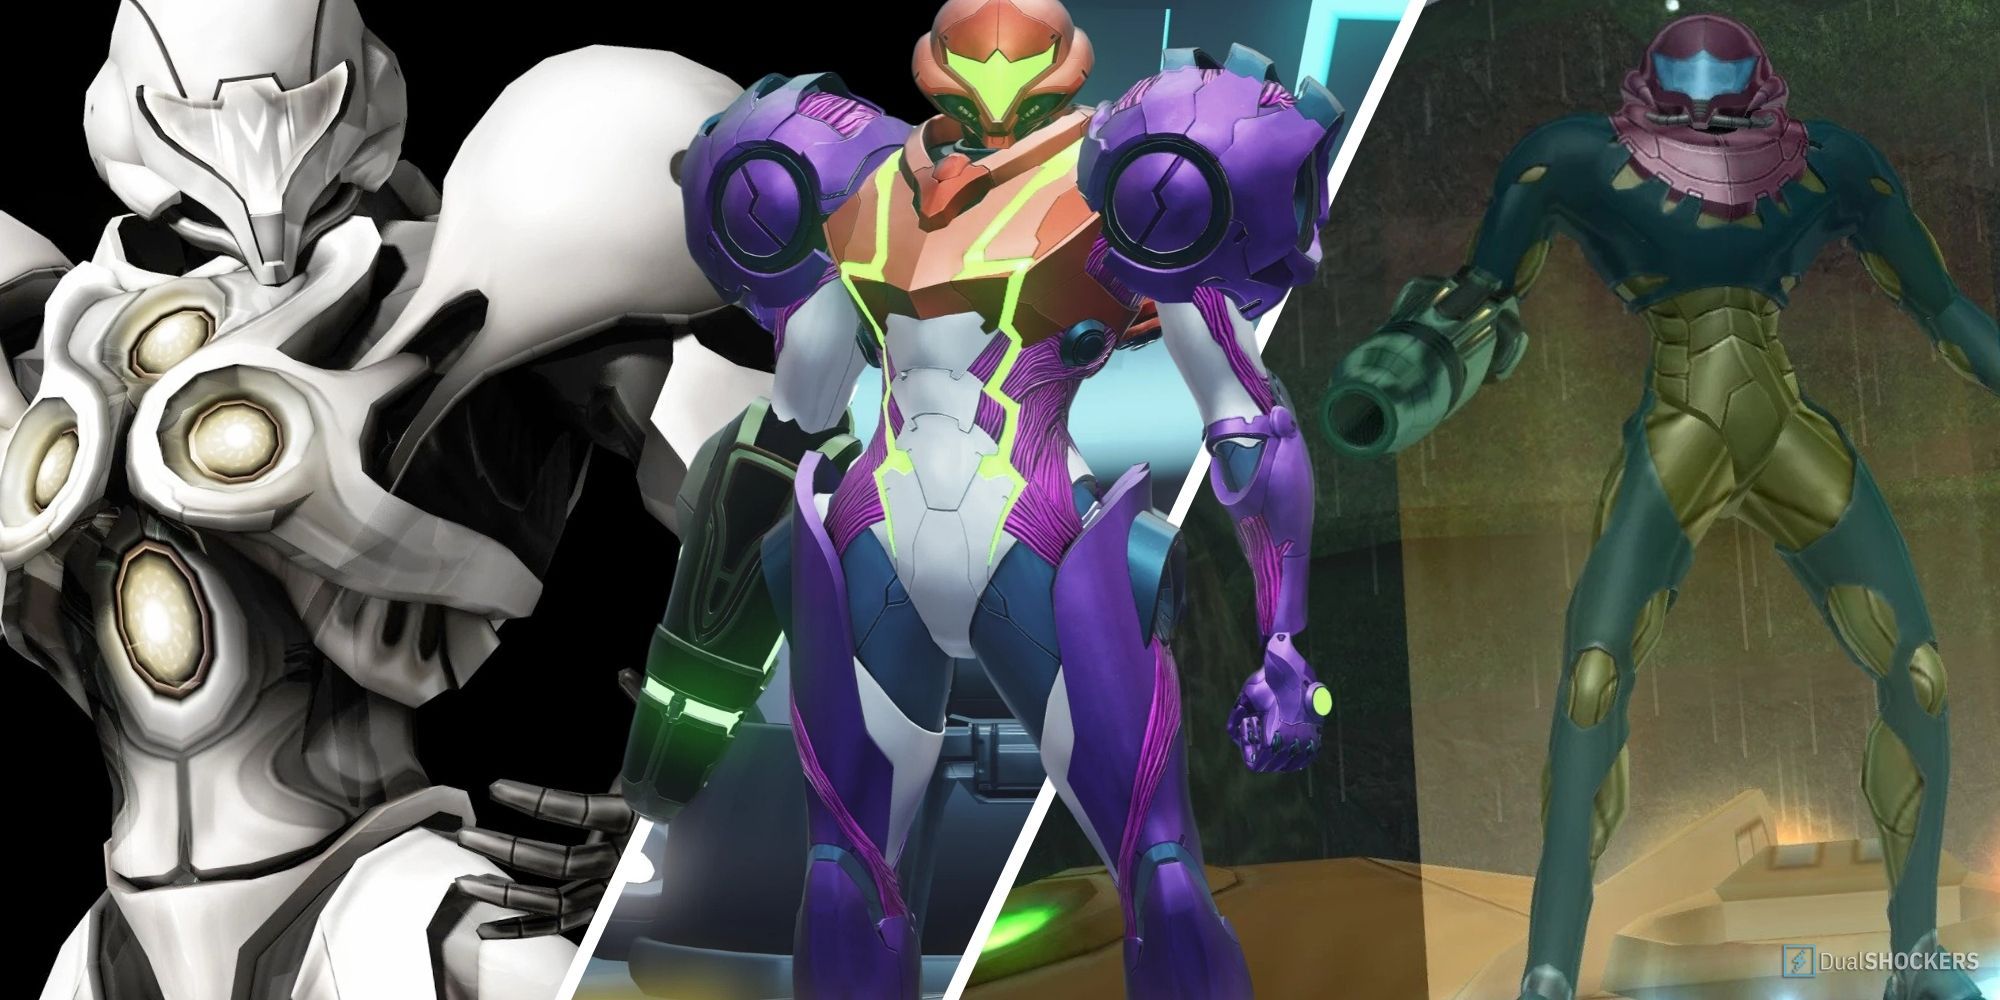 Left to right: Samus in the Light Suit, Samus in the Gravity Suit, Samus in the Fusion Suit